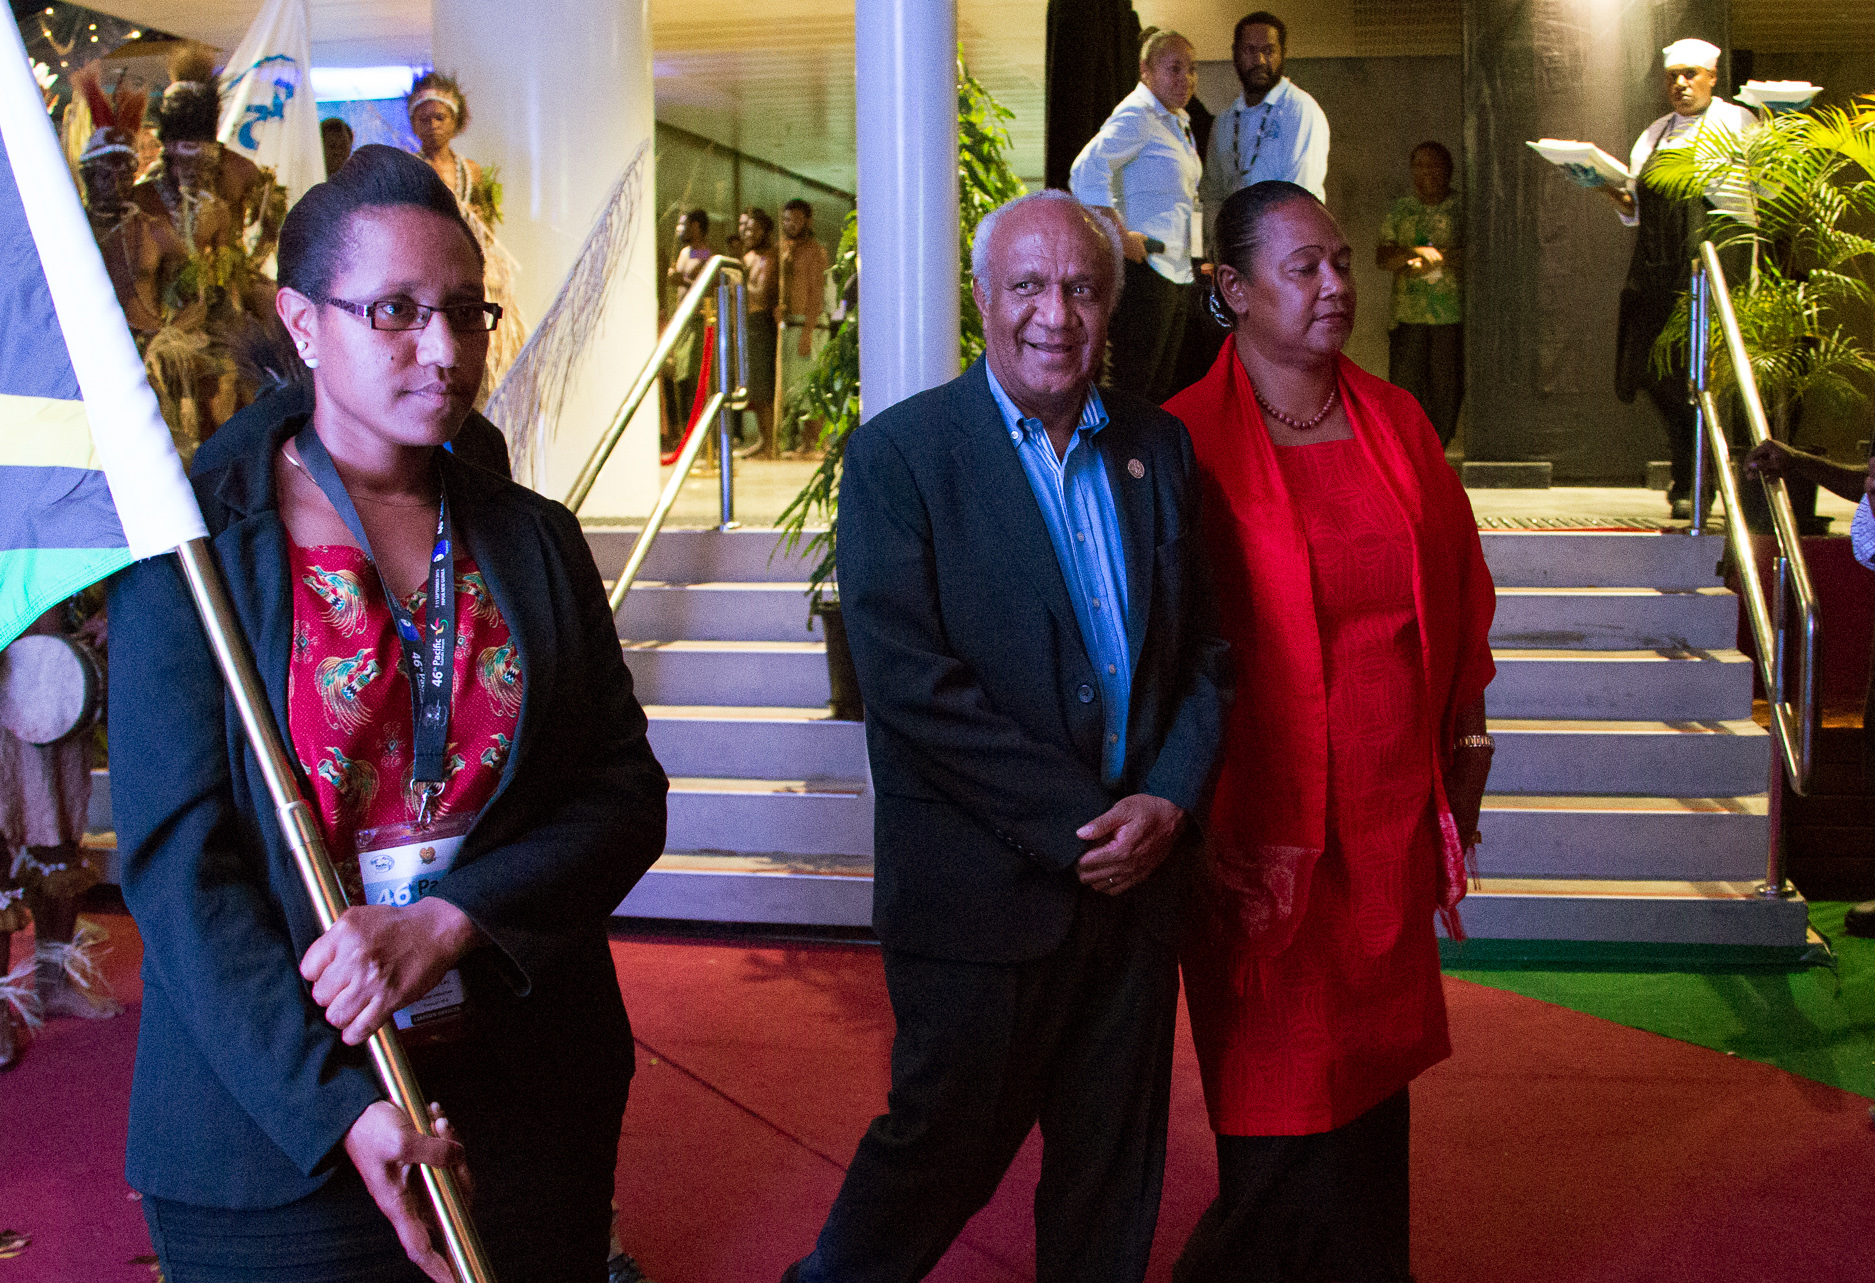 Vanuatu : remaniement ministériel a minima